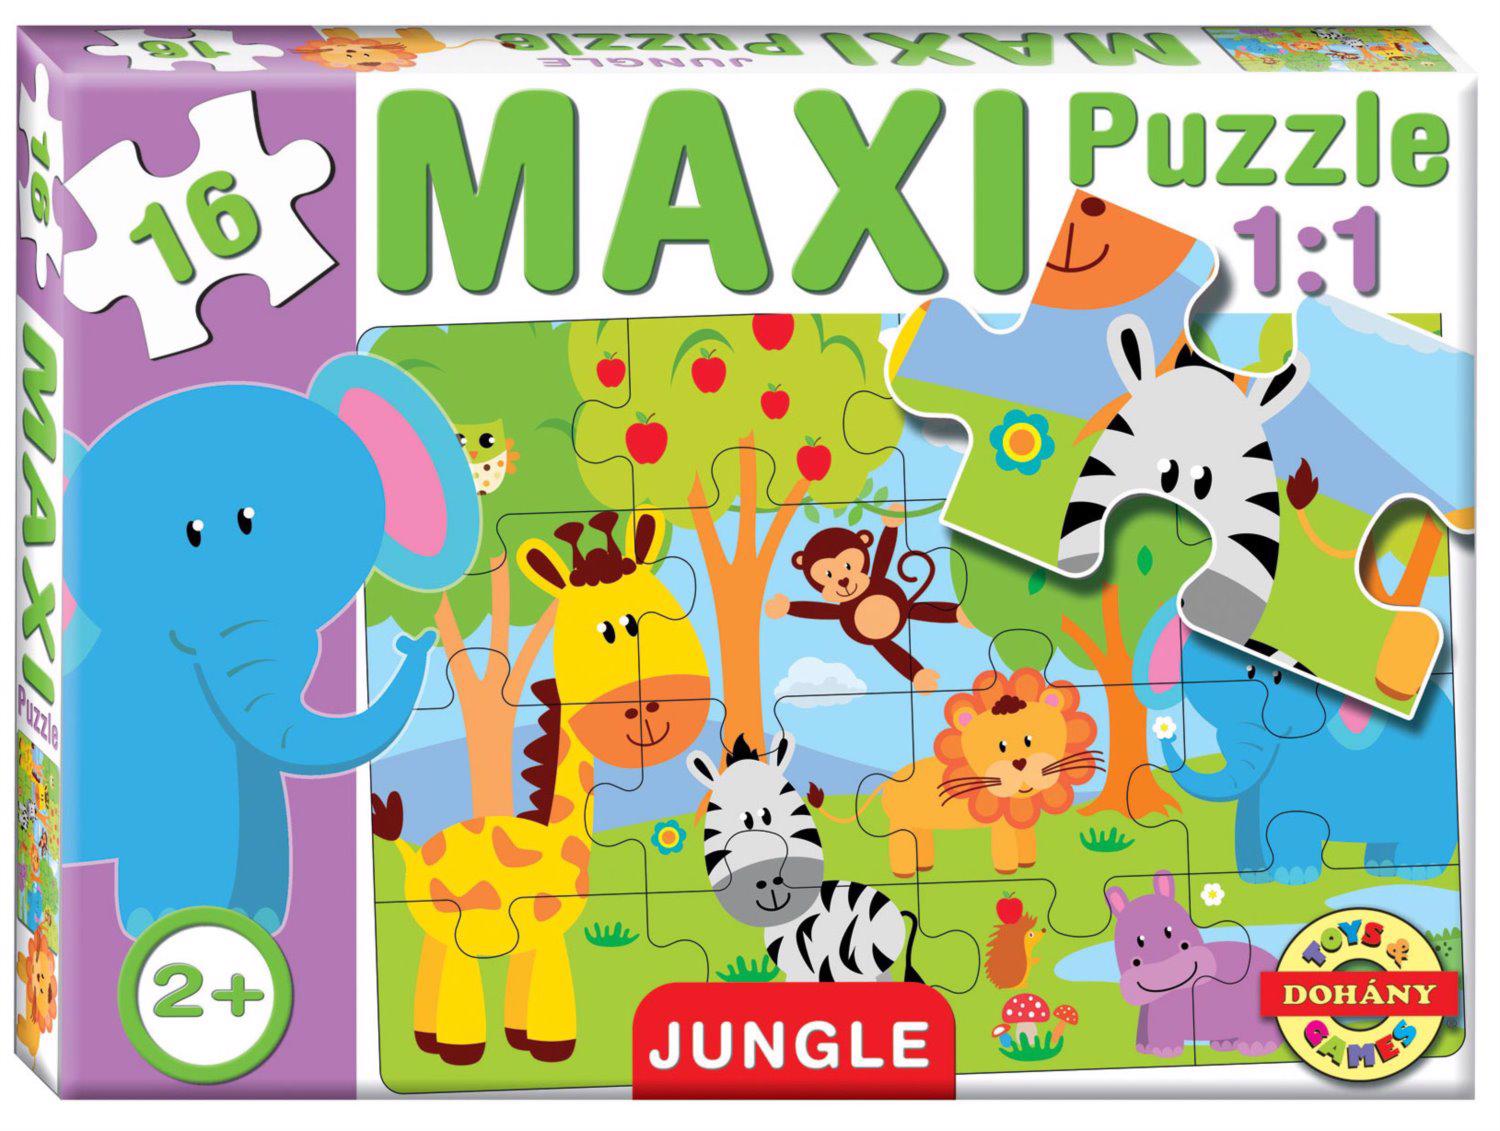 Maxi Puzzle Jungle 16